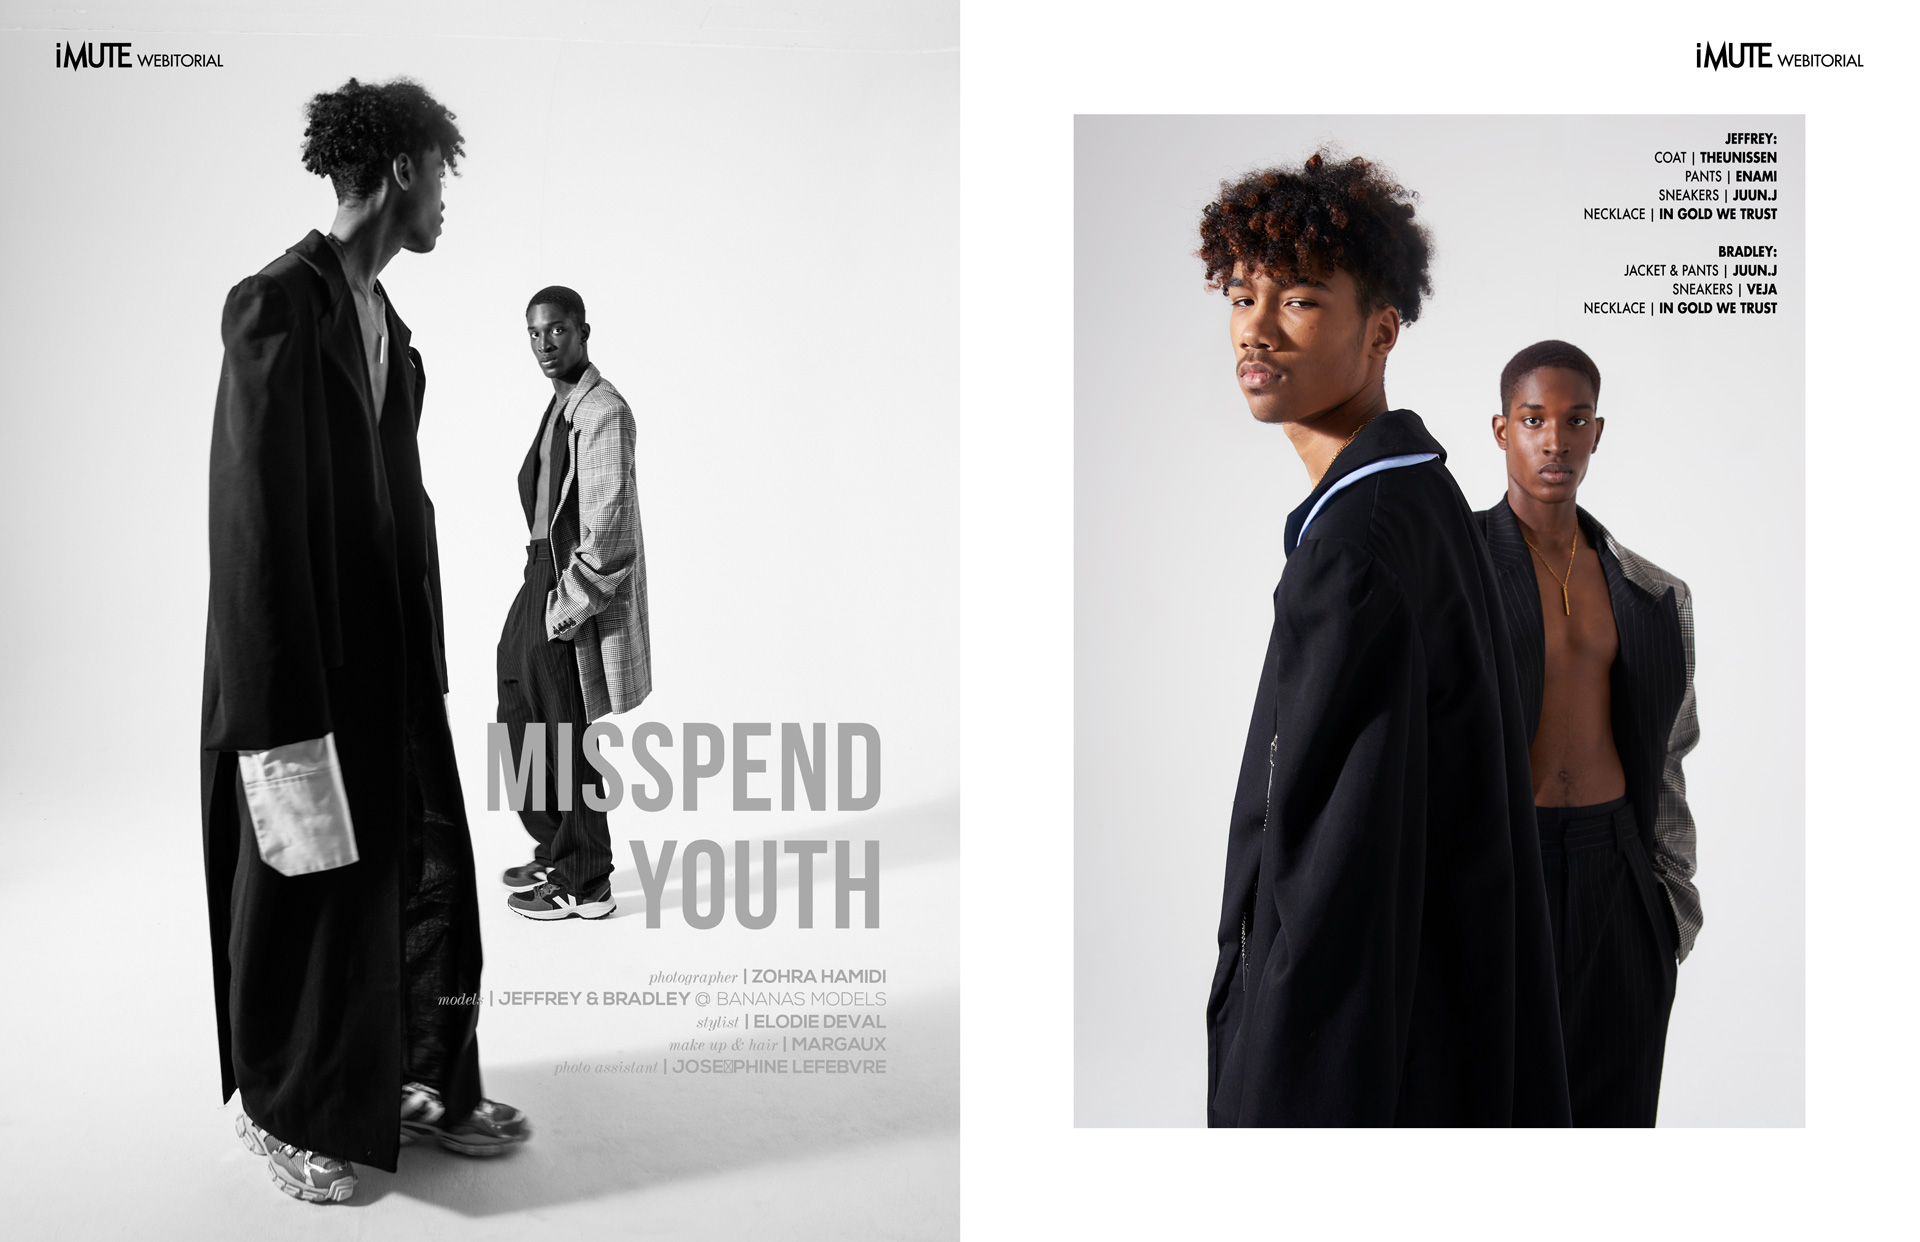 Misspend Youth webitorial for iMute Magazine  PHOTOGRAPHER | ZOHRA HAMIDI MODELS | JEFFREY & BRADLEY @ BANANAS MODELS STYLIST | ELODIE DEVAL MAKEUP & HAIR  | MARGAUX PHOTO ASSISTANT | JOSÉPHINE LEFEBVRE